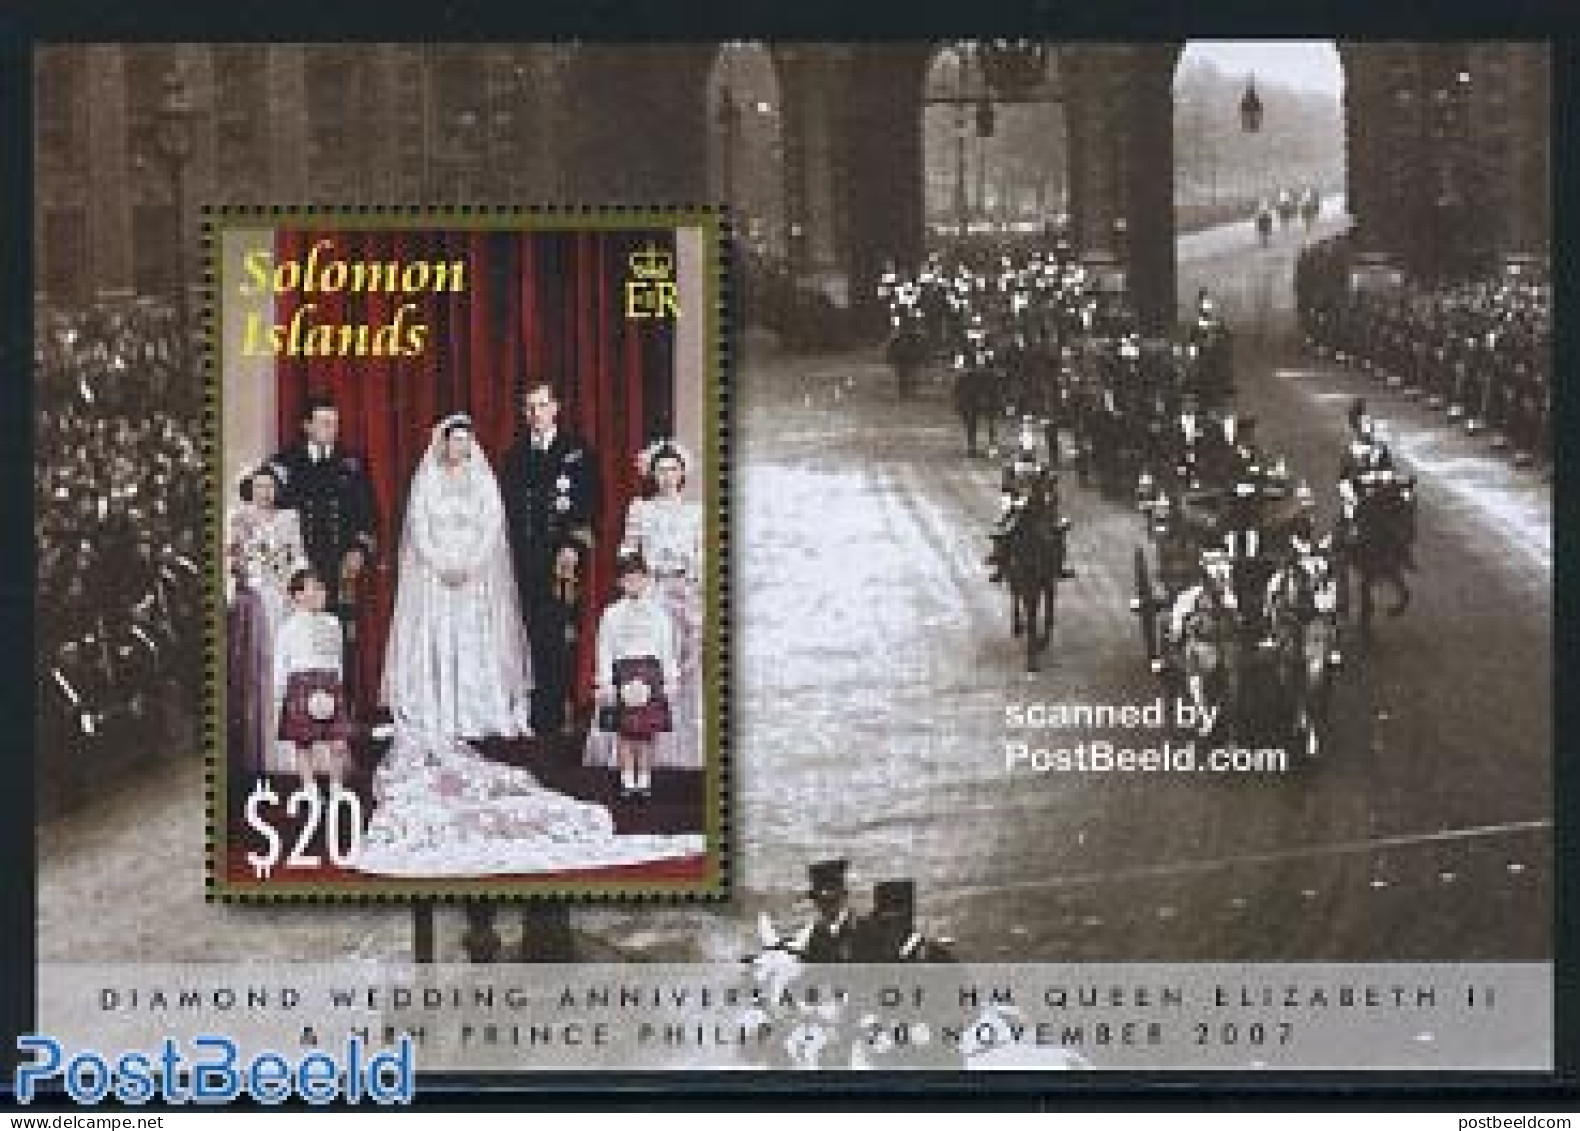 Solomon Islands 2007 Elizabeth II Diamond Wedding S/s, Mint NH, History - Kings & Queens (Royalty) - Royalties, Royals